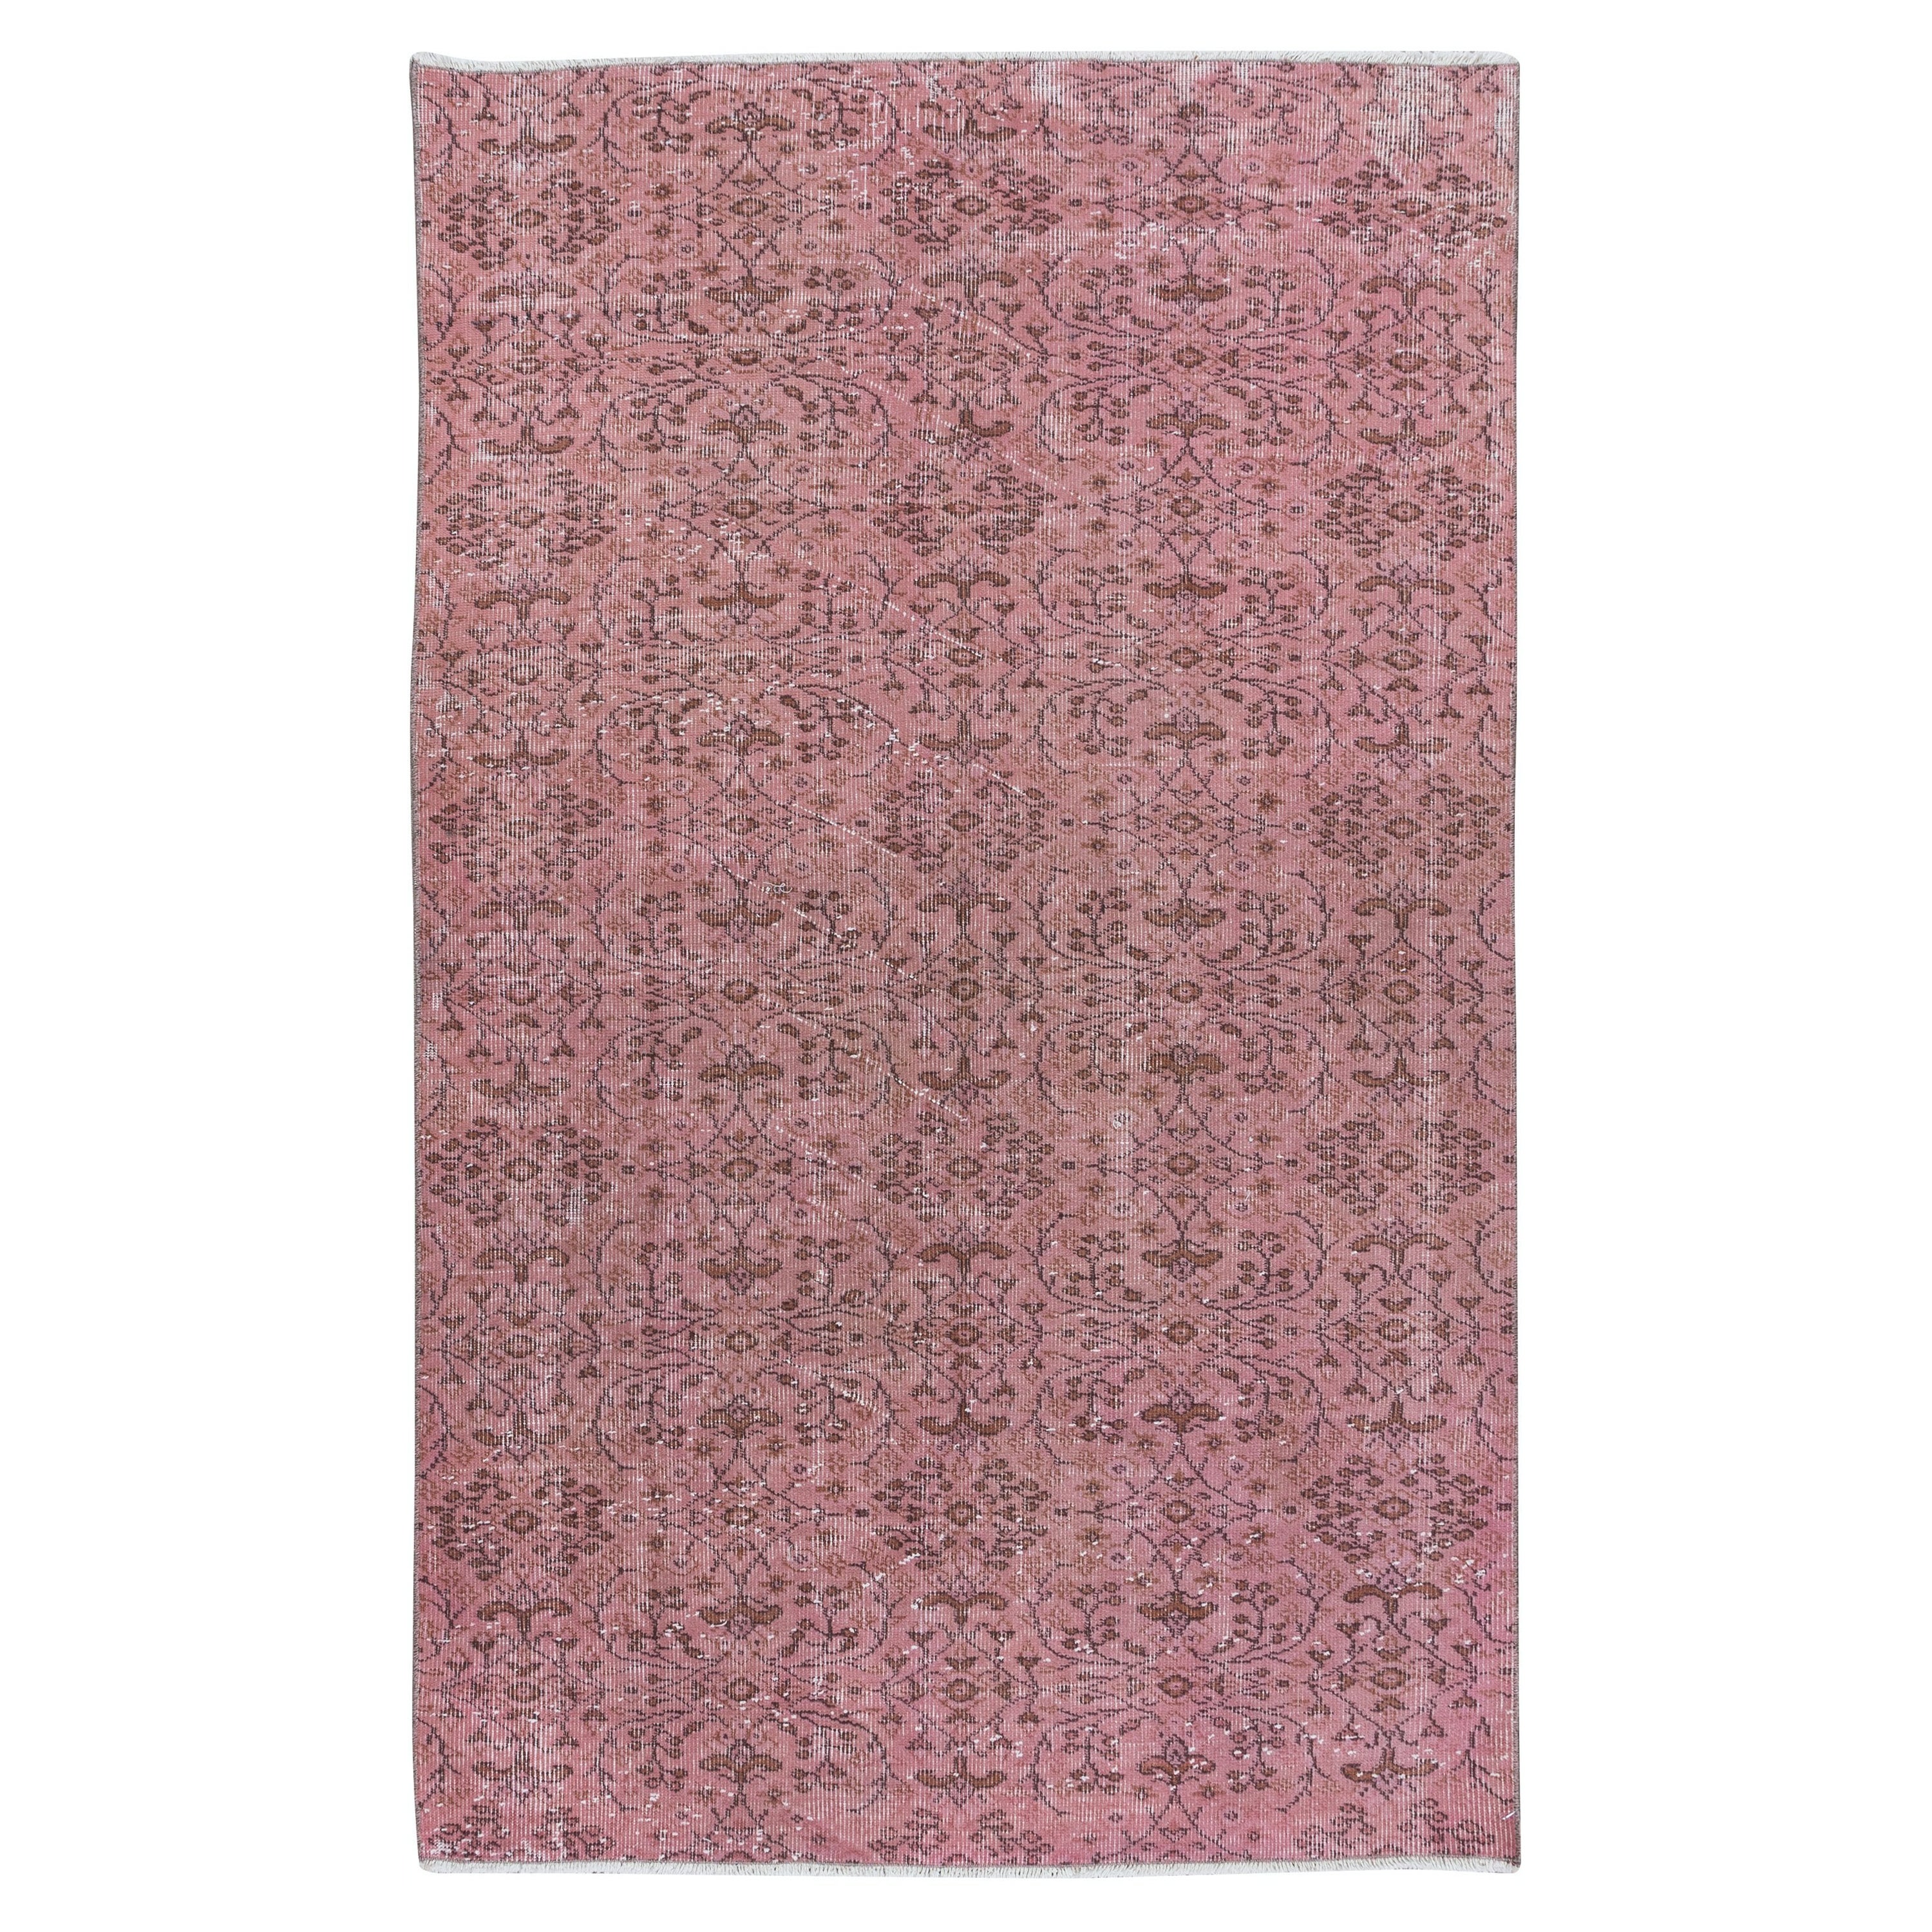 4.3x6.6 Ft Soft Pink Handmade Turkish Indoor Outdoor Rug with Floral Design For Sale